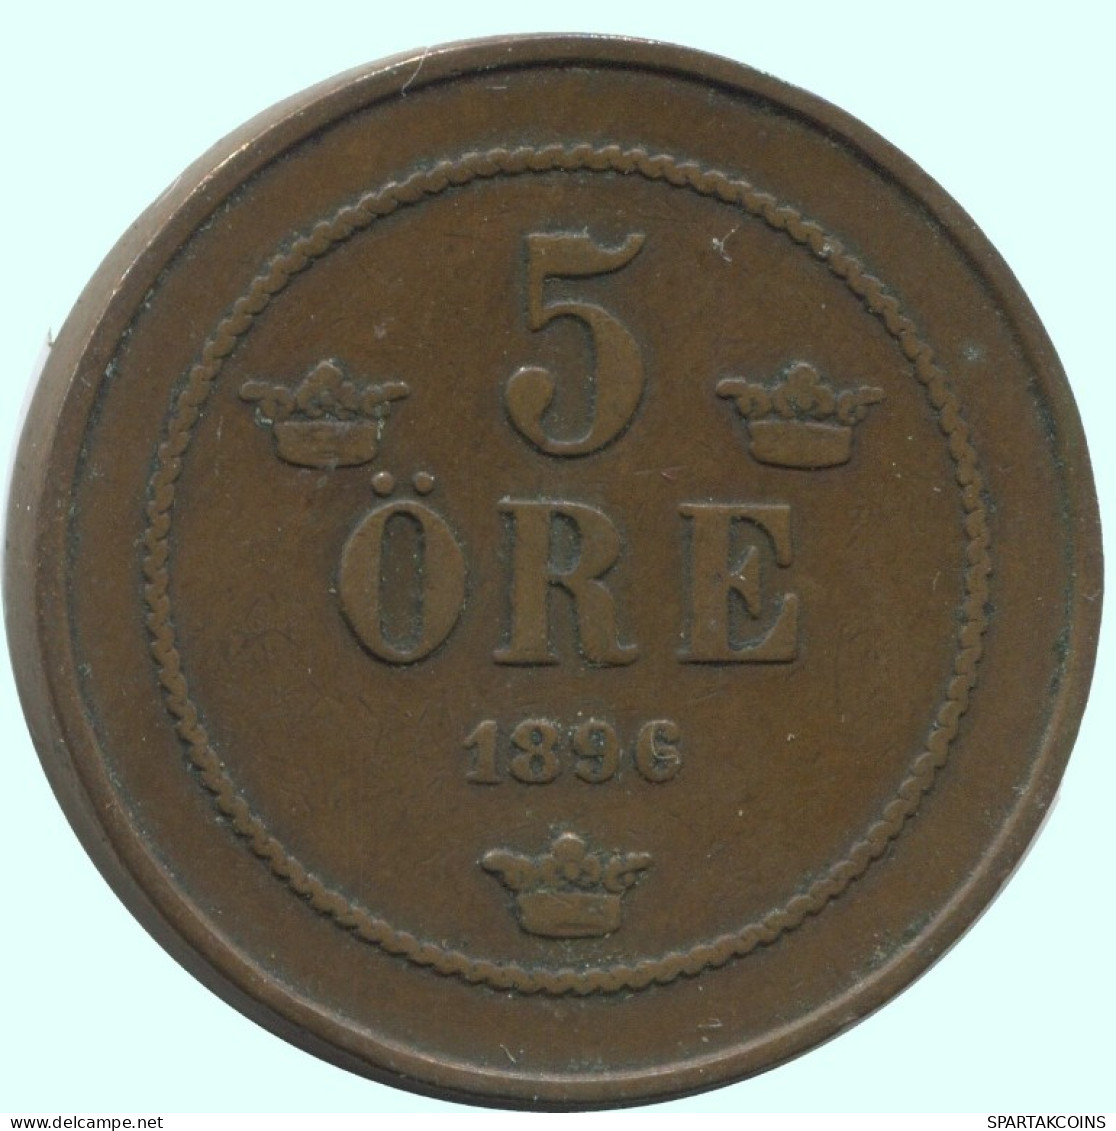 5 ORE 1891 SCHWEDEN SWEDEN Münze #AC650.2.D.A - Zweden